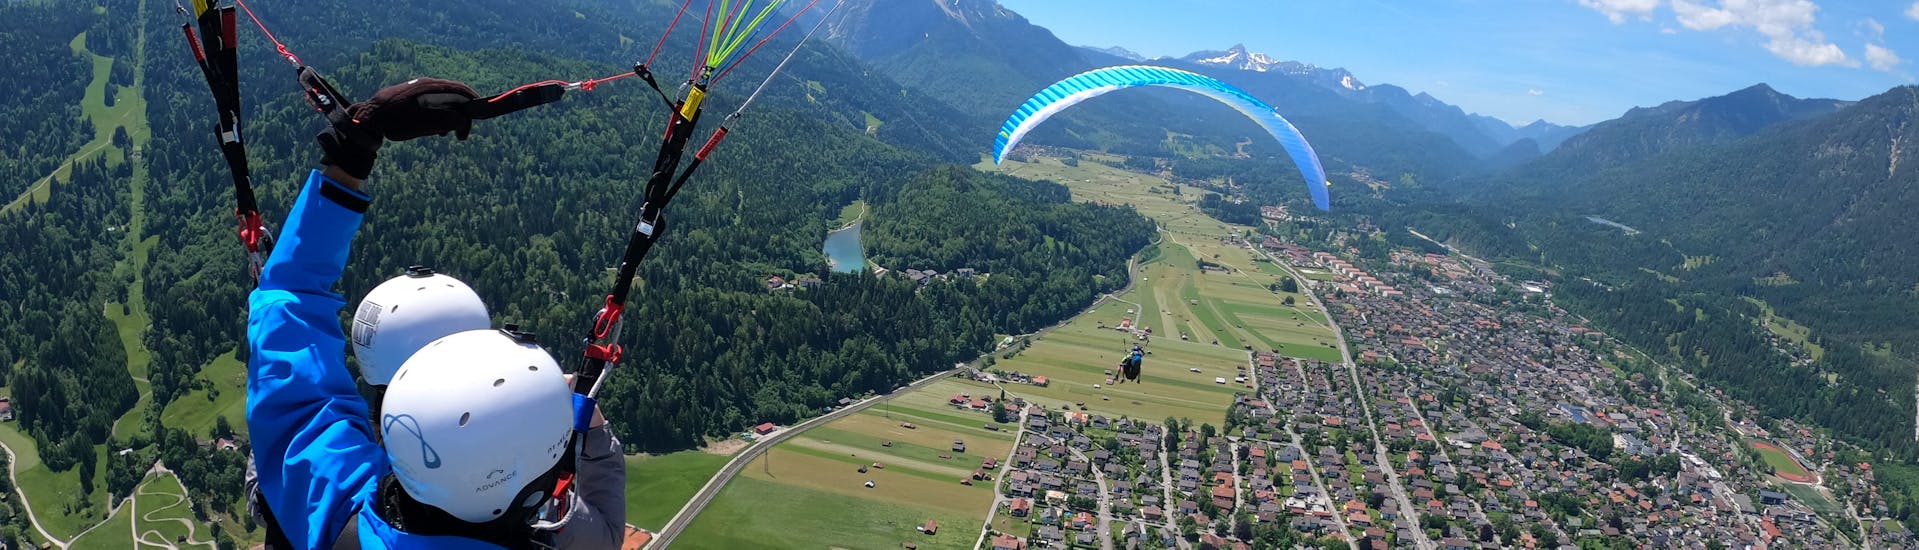 Parapente biplaza panorámico en Garmisch-Partenkirchen.